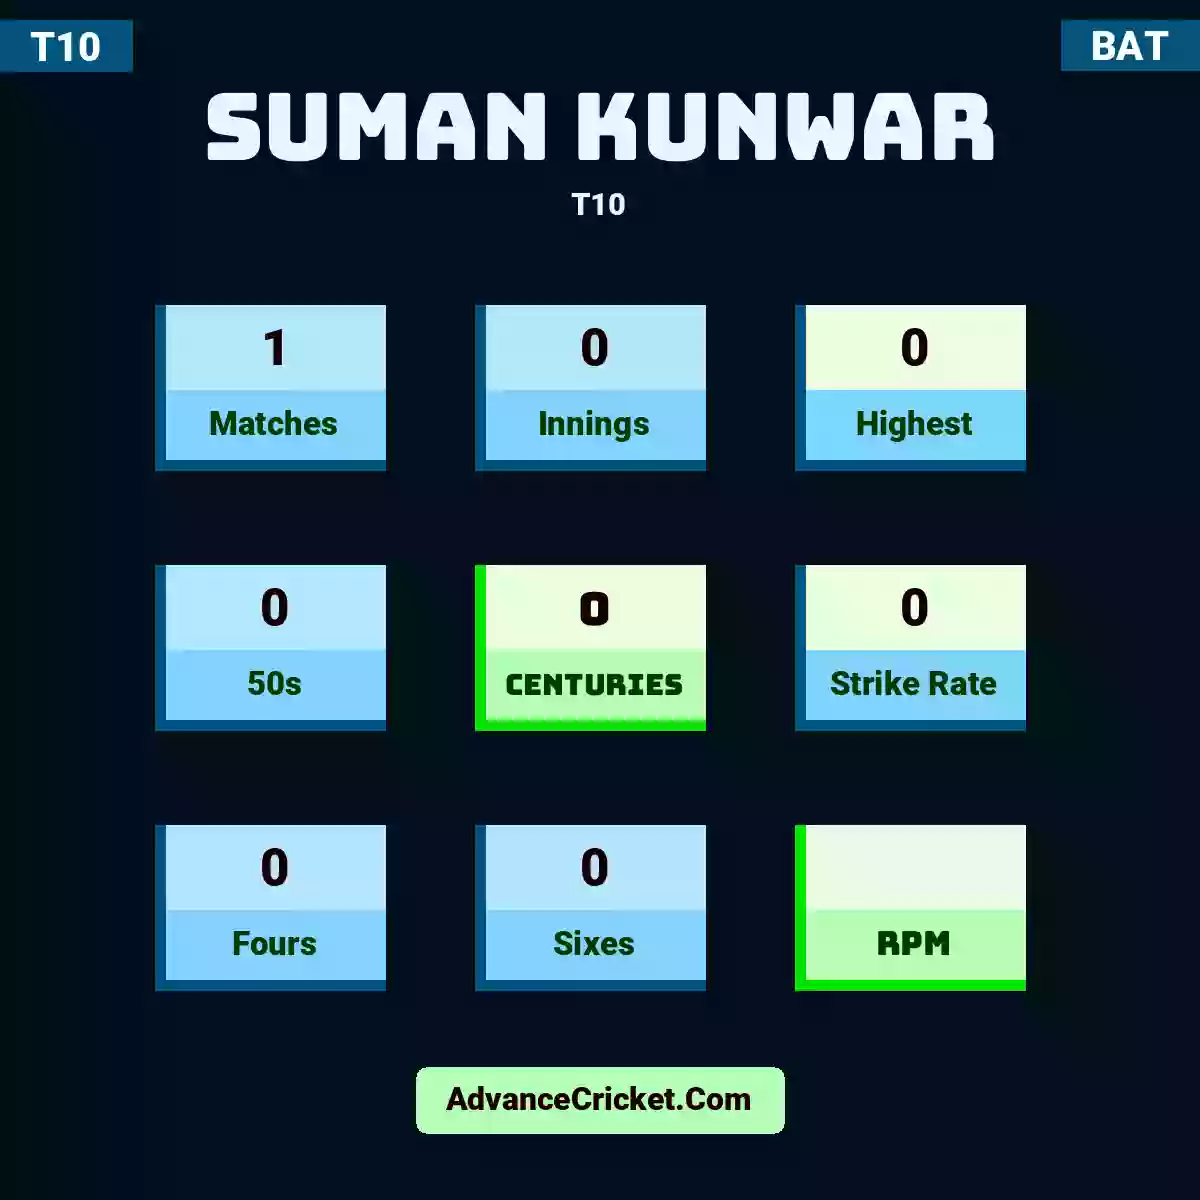 Suman Kunwar T10 , Suman Kunwar played 1 matches, scored 0 runs as highest, 0 half-centuries, and 0 centuries, with a strike rate of 0. S.Kunwar hit 0 fours and 0 sixes.